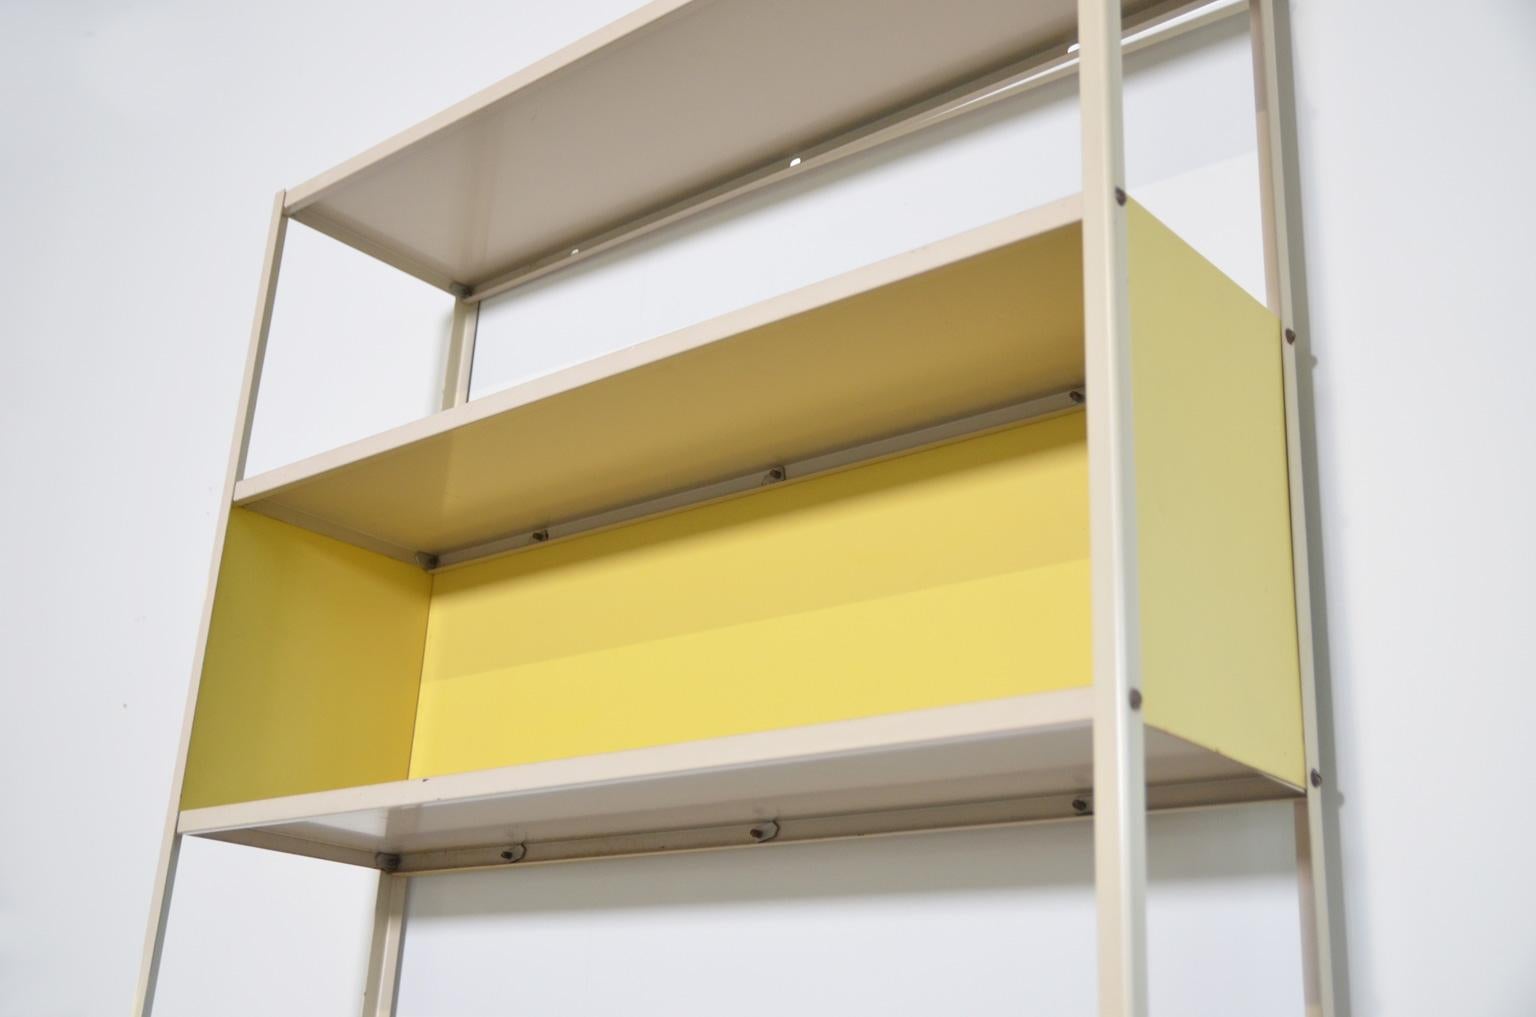 Mid-20th Century Asmeta Wall System in yellow and grey by Dutch designer Friso Kramer